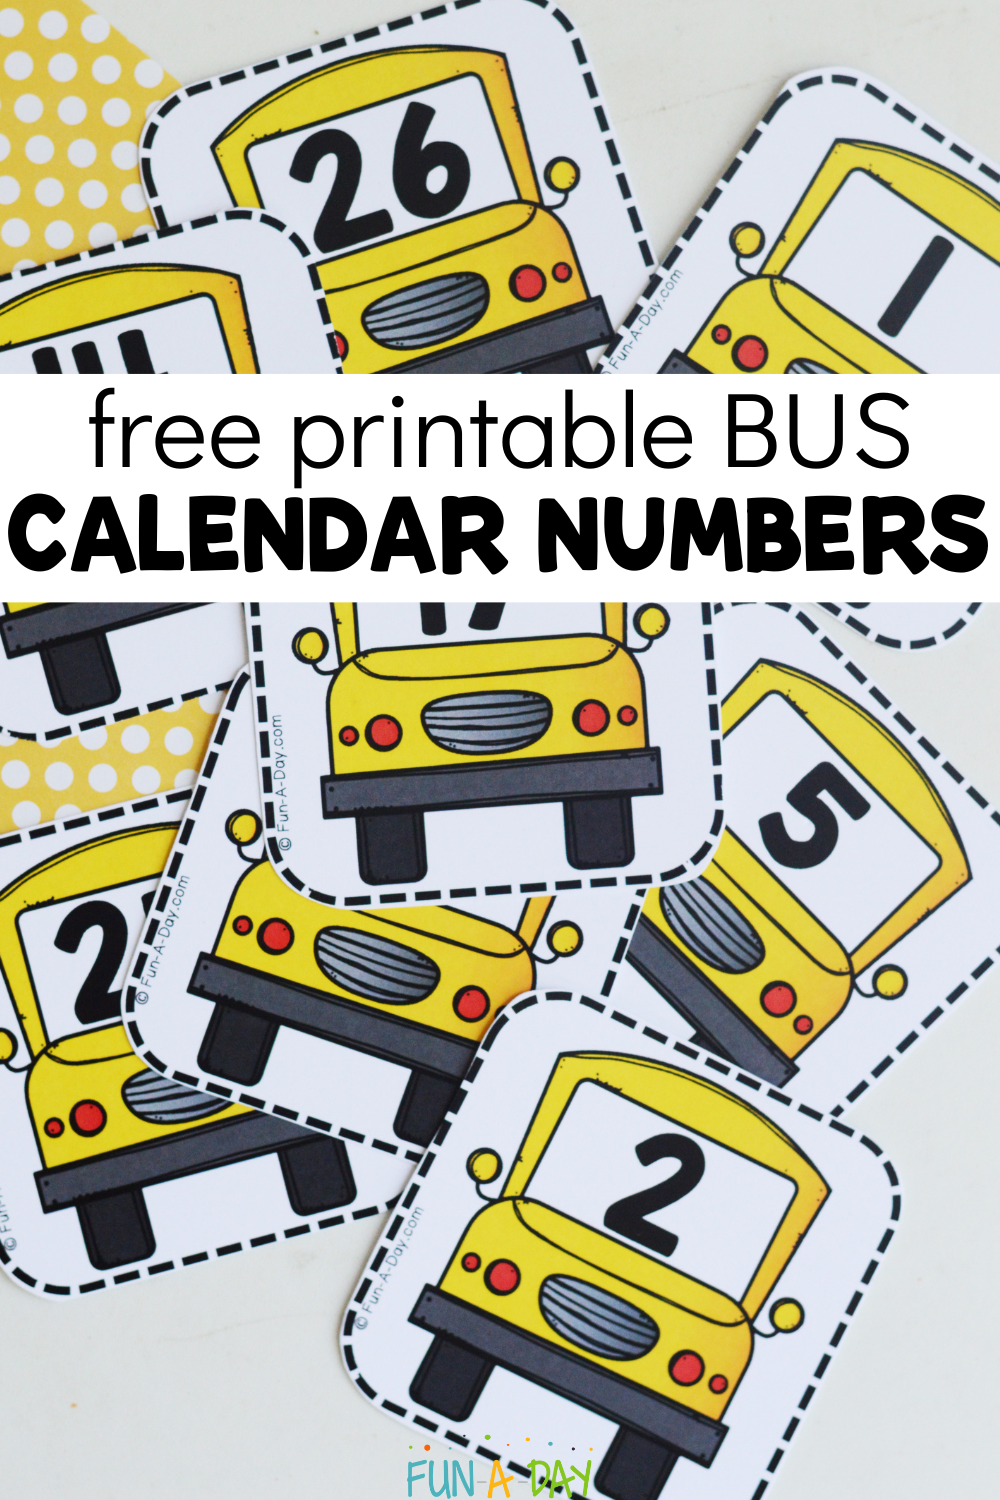 Pile of bus calendar numbers in disarray